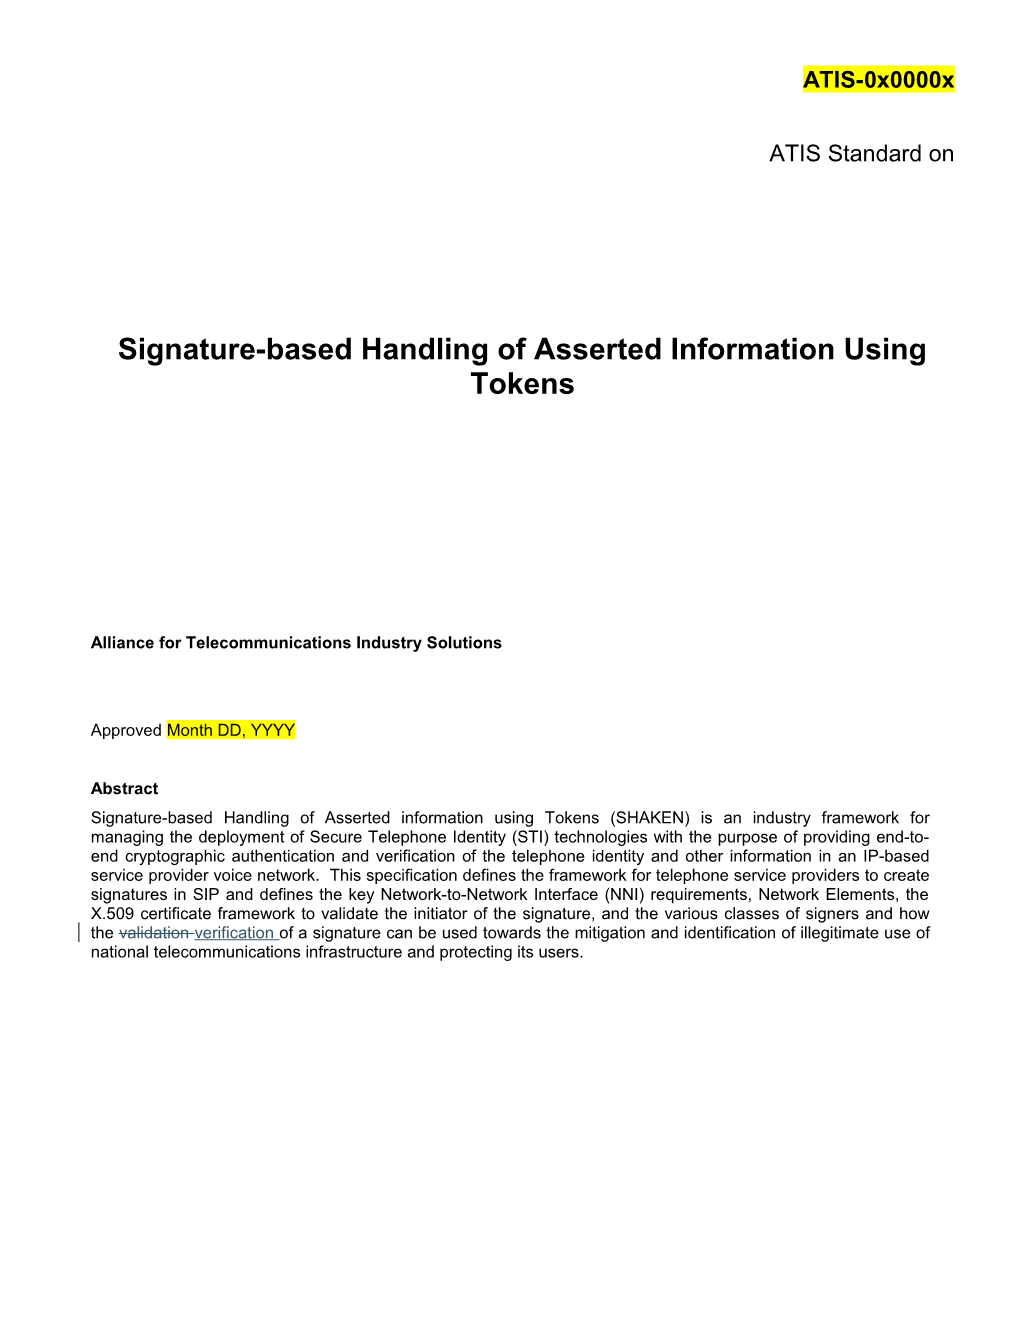 Signature-Based Handling of Asserted Information Using Tokens